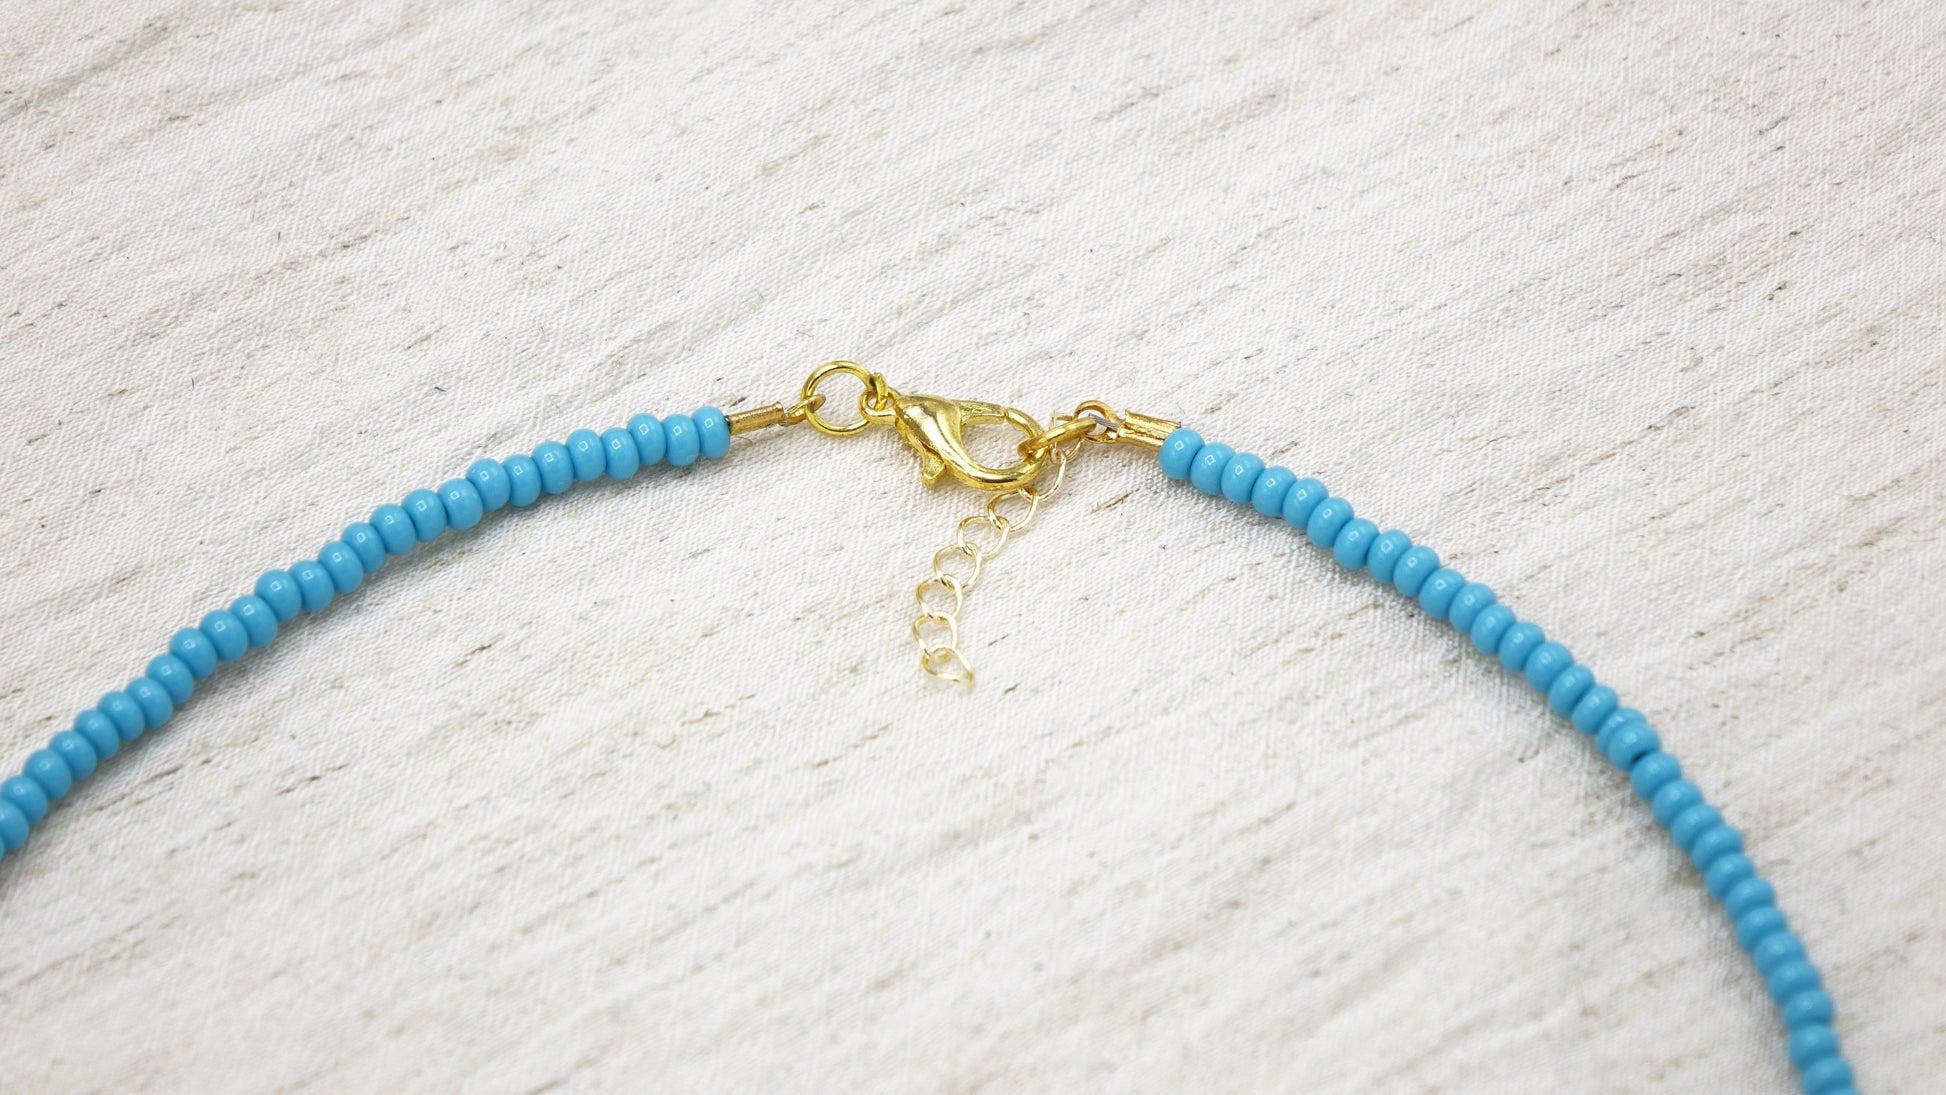 Beaded Ocean Theme Necklace - Verna Artisan Works